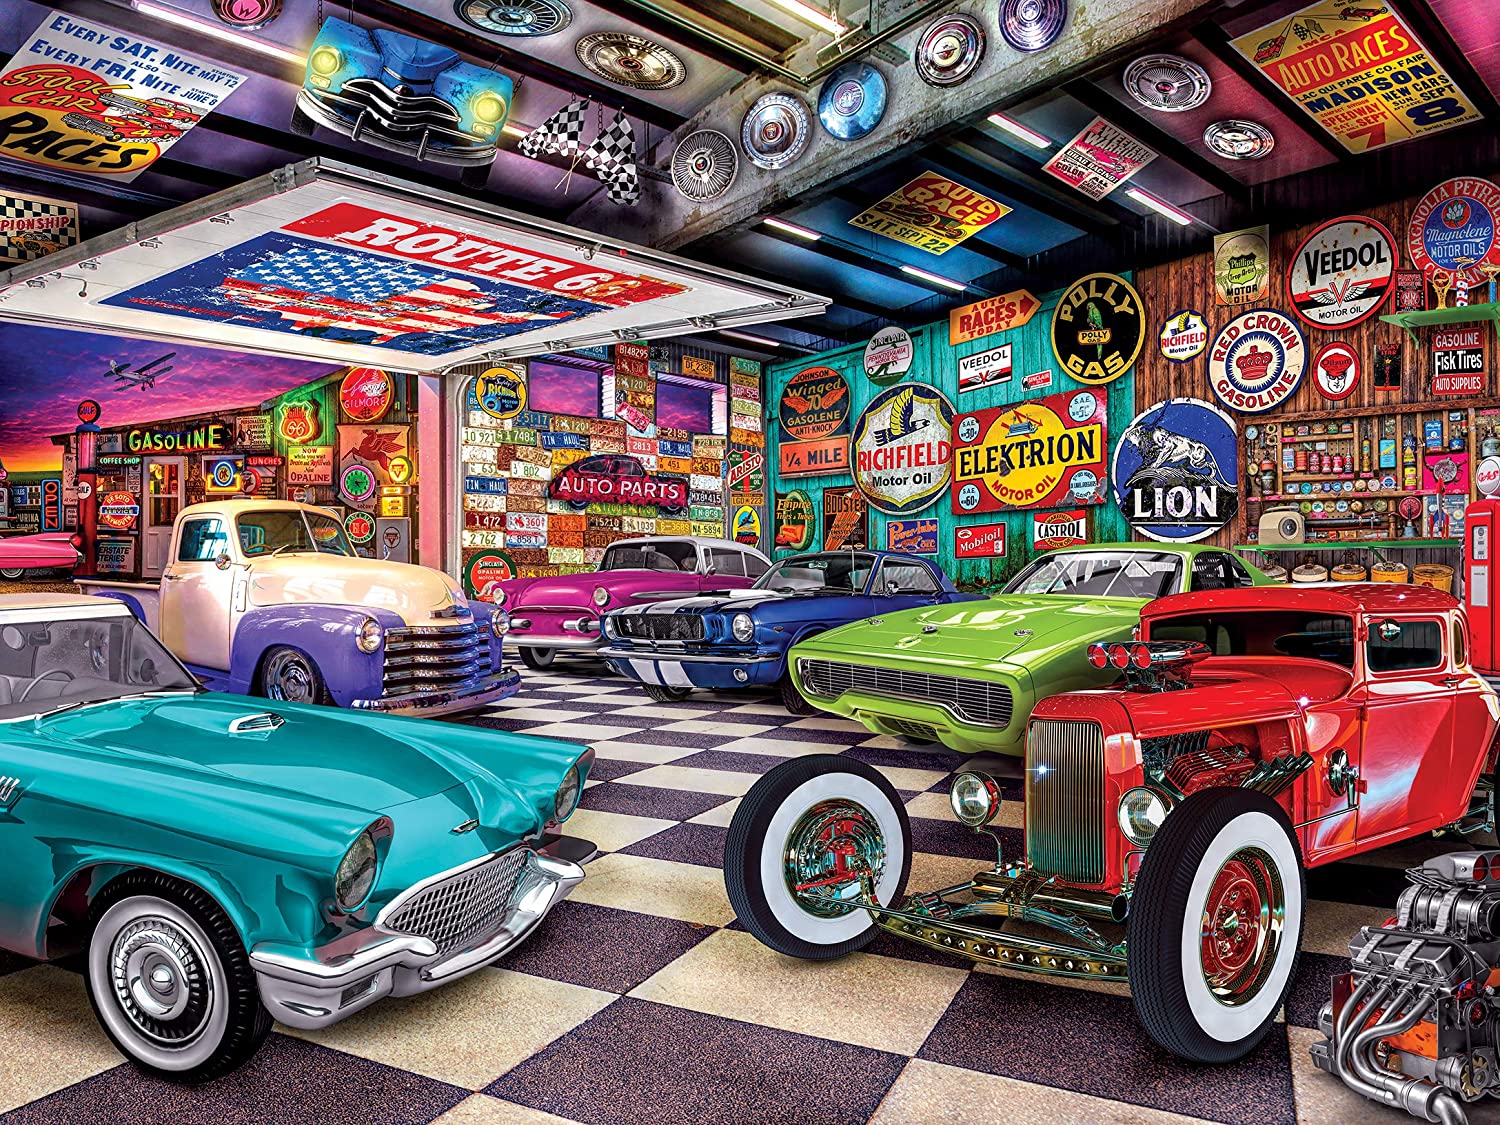 Masterpieces Rodas 750 Puzzles Collection - Collector's Garage 750 Peça  Quebra-cabeça - Carrefour